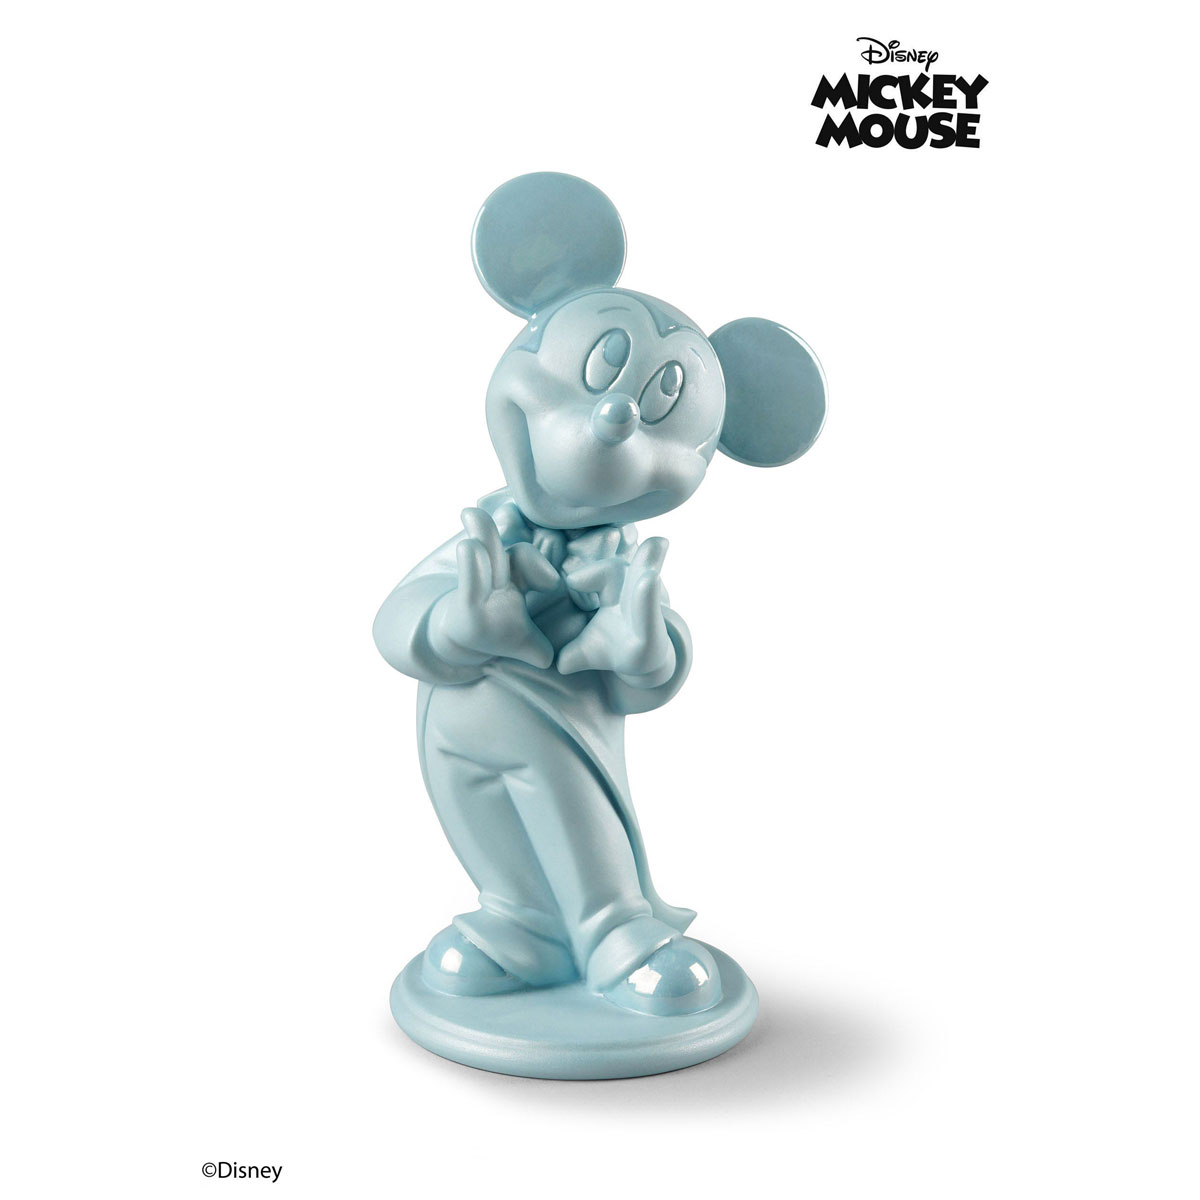 Lladro Disney, Mickey Mouse Figurine. Blue